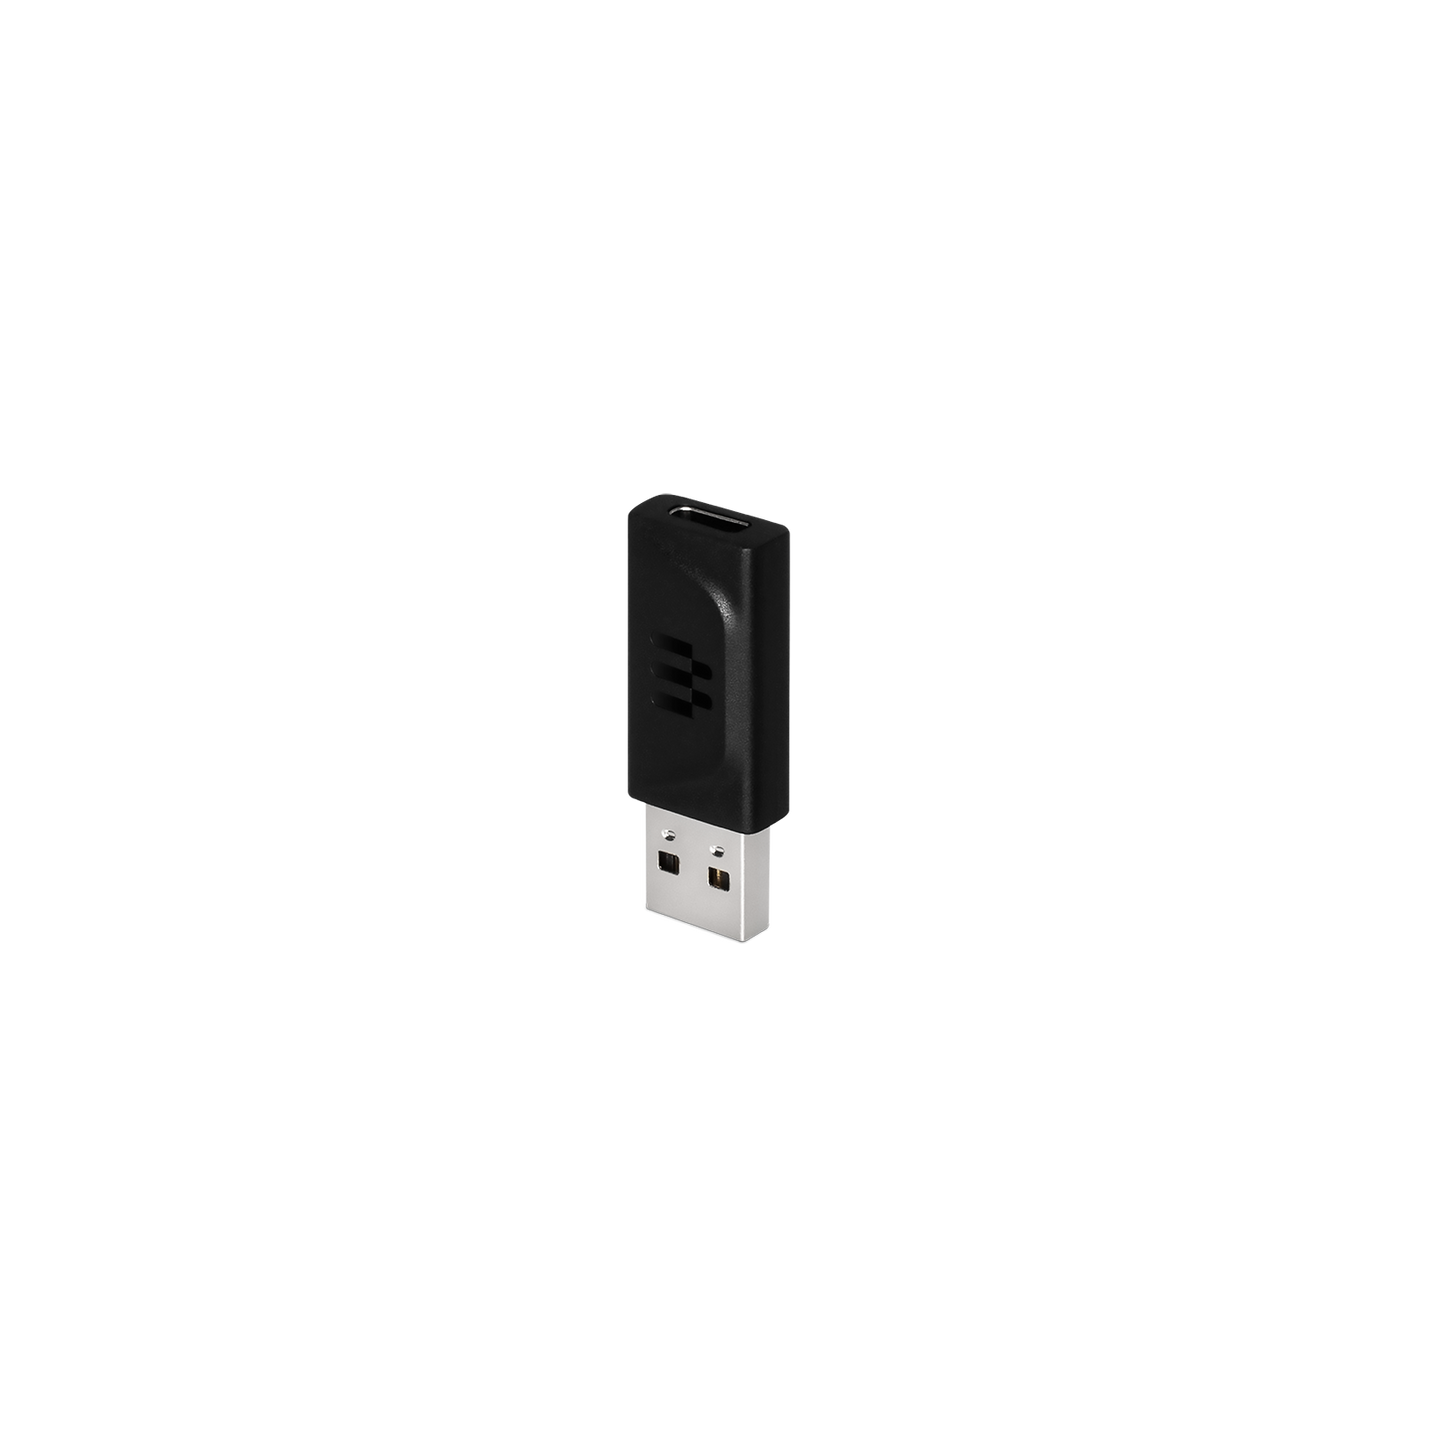 EPOS USB-C to USB-A